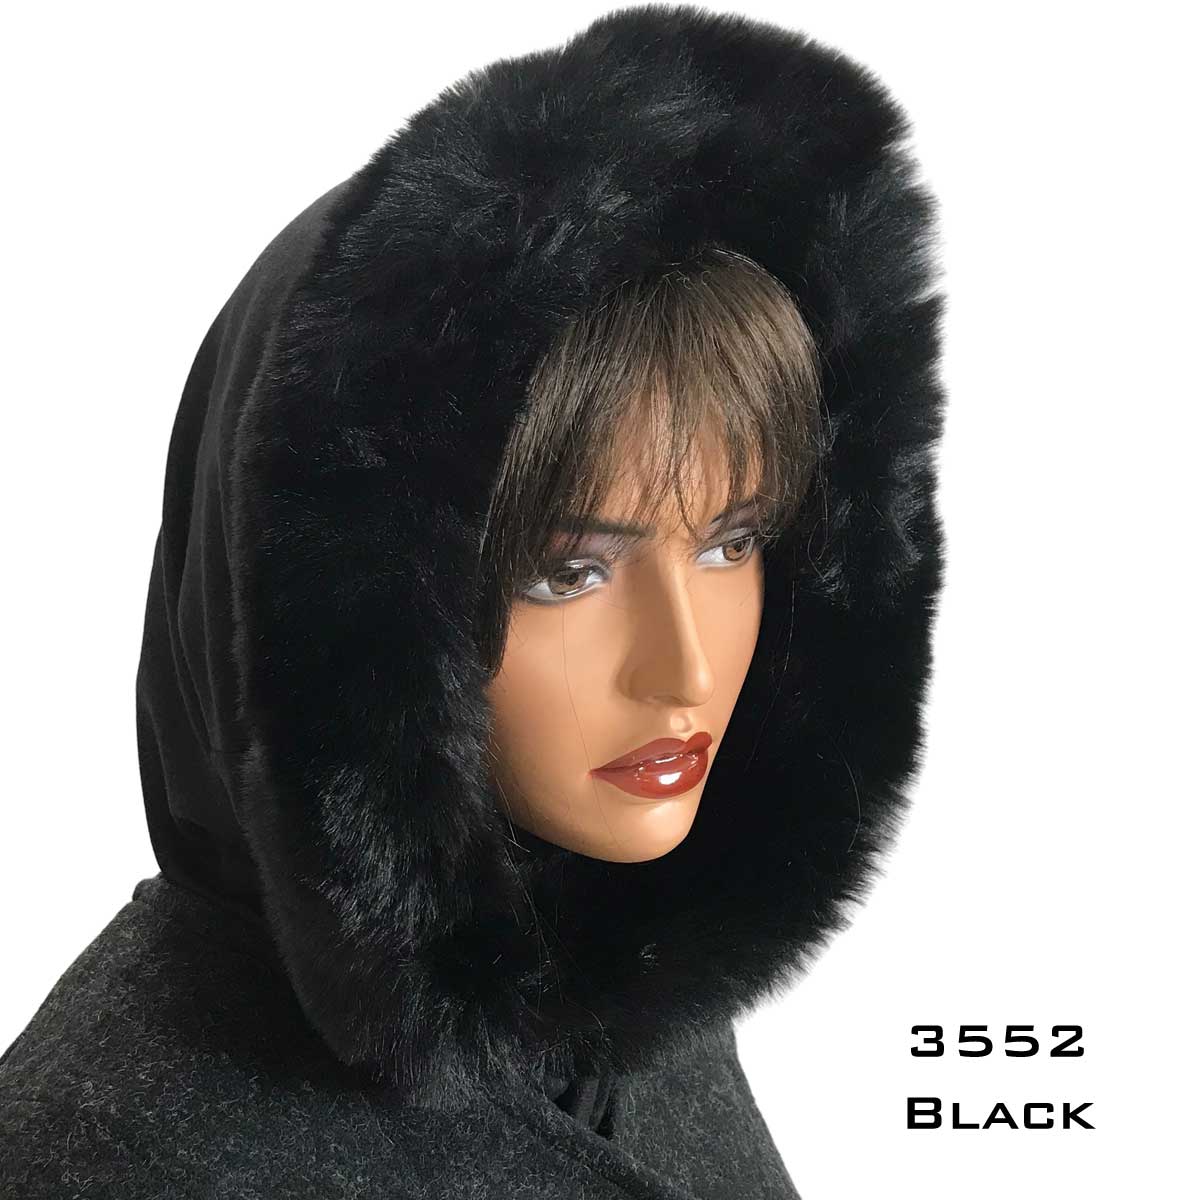 Black<br> Black Fur Trimmed Infinity Hood